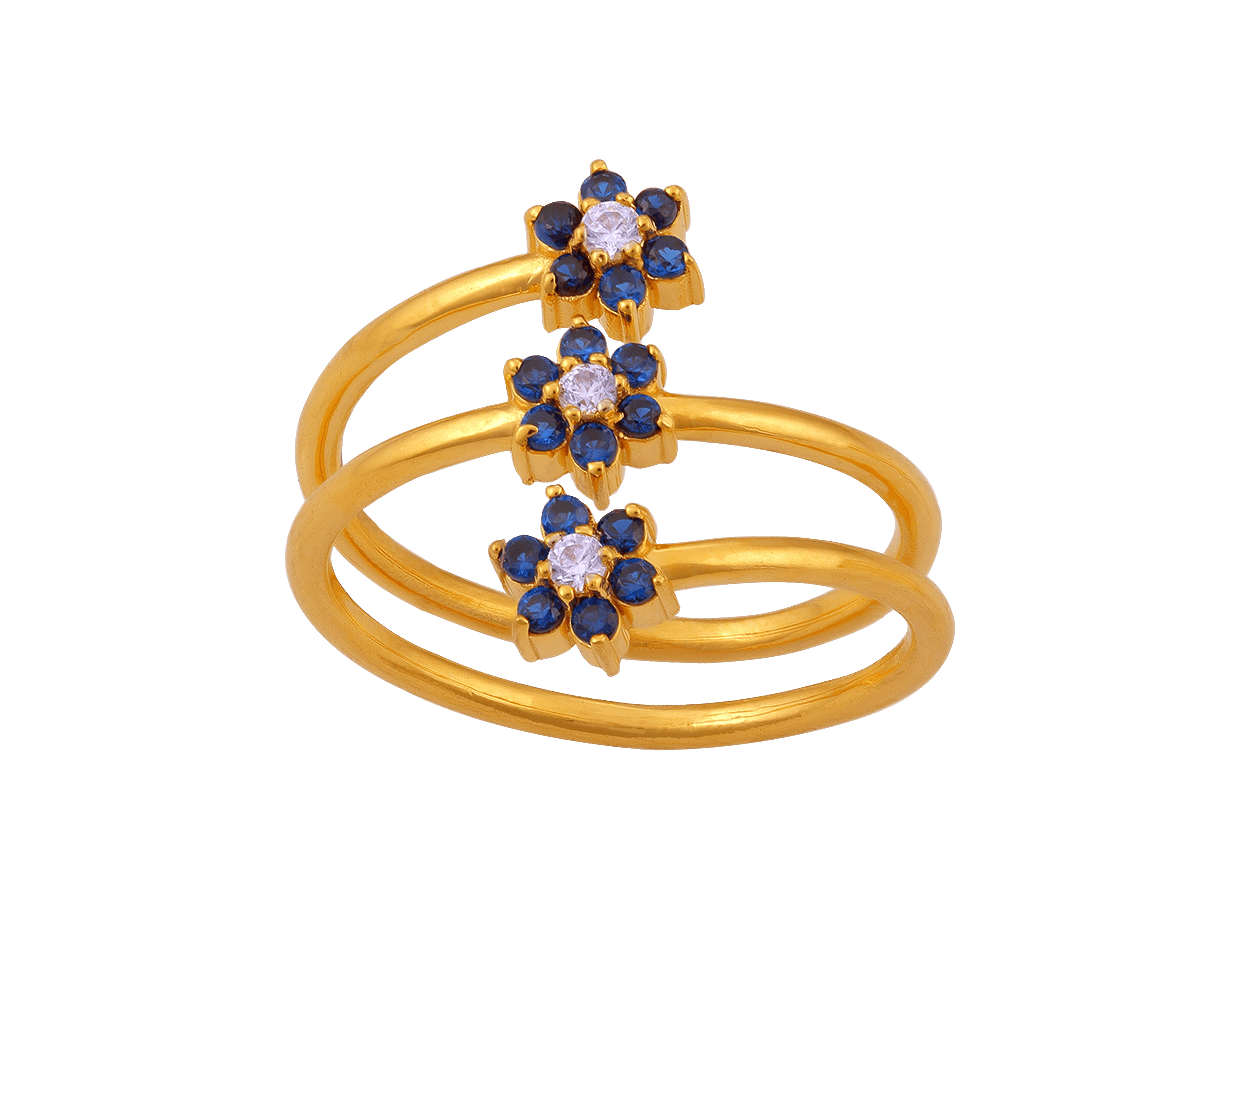 1 Gram Gold Forming Blue Stone With Diamond Artisanal Design Ring - Style  A885, सोने की अंगूठी - Soni Fashion, Rajkot | ID: 2849142564033